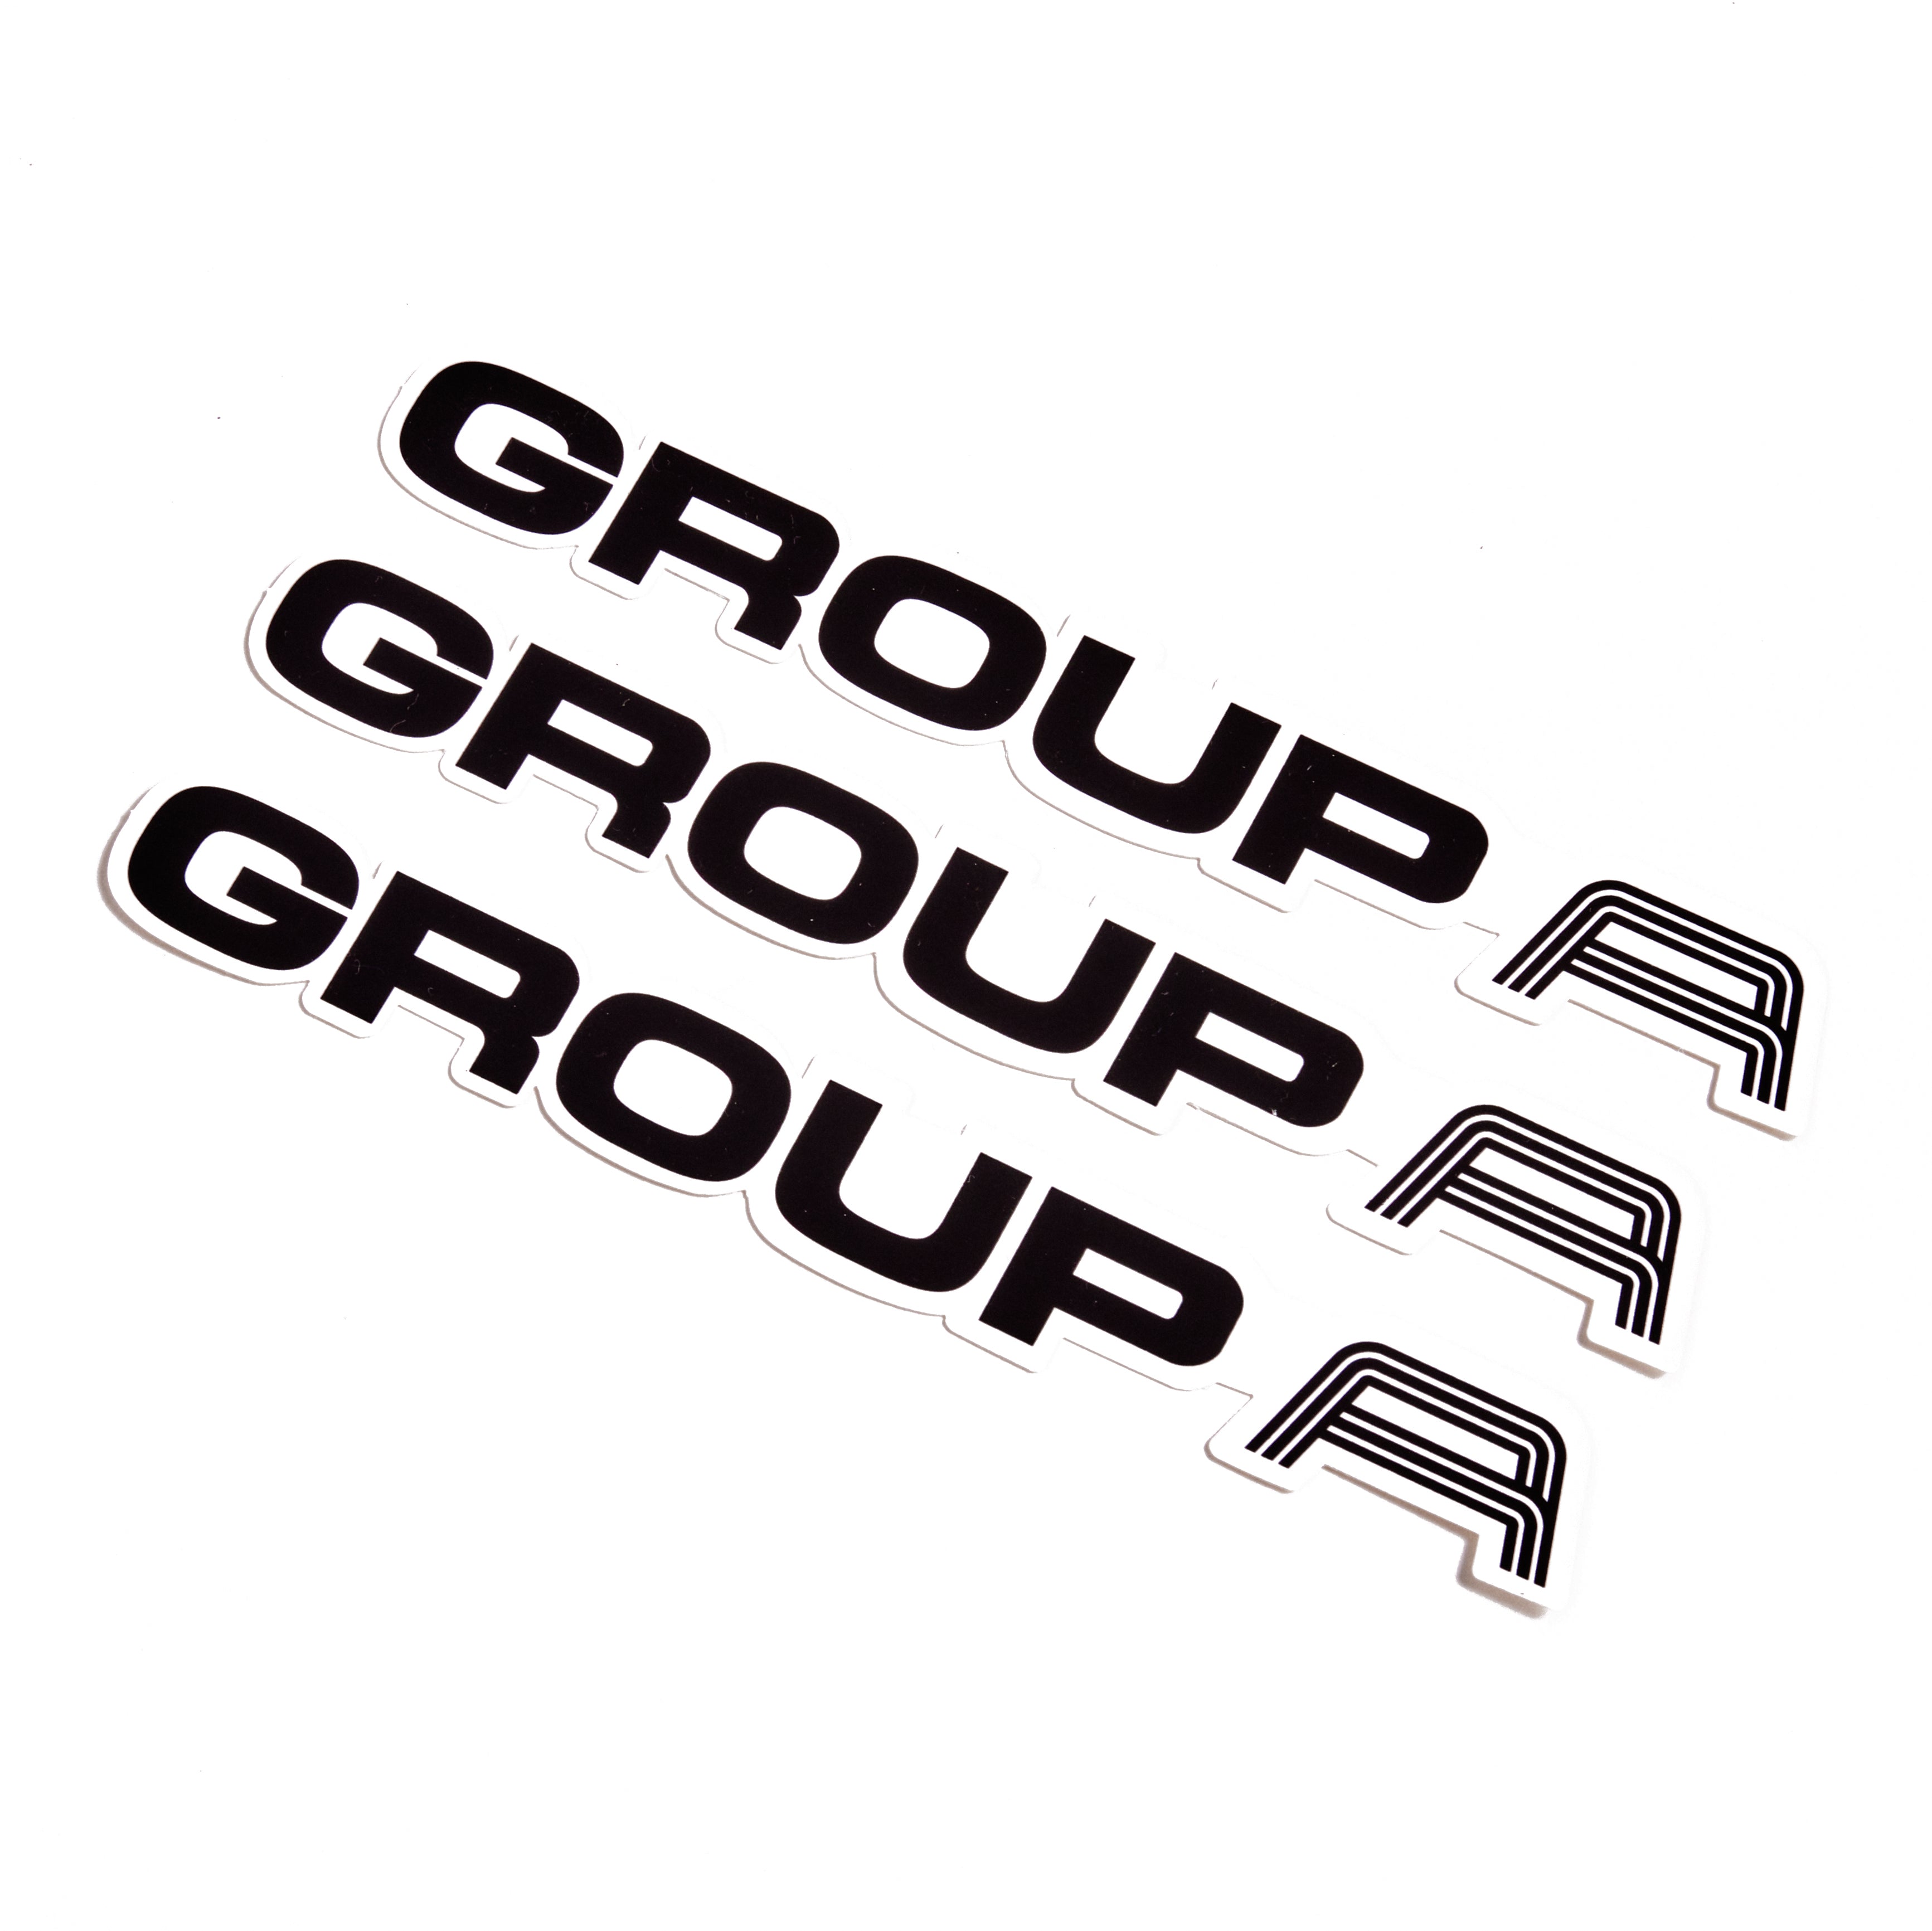 Group A Linear Sticker